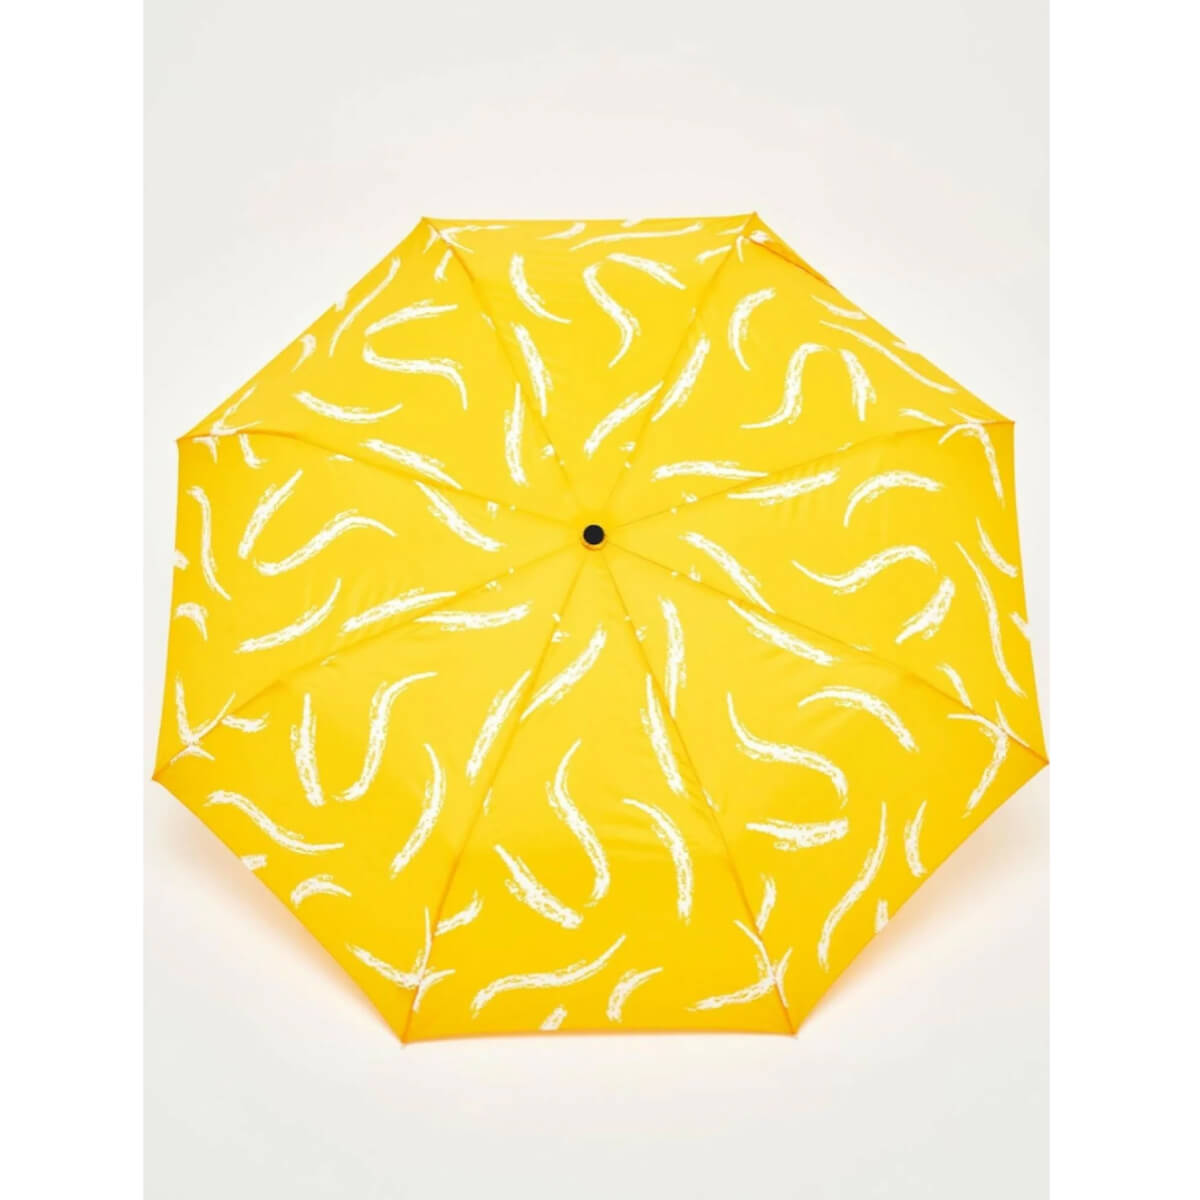 Saffron Brush Compact Duckhead Umbrella front | MILK MONEY milkmoney.co | white elephant gift ideas, gift, mother's day gift ideas, white elephant gift, gift shops near me, cute umbrella